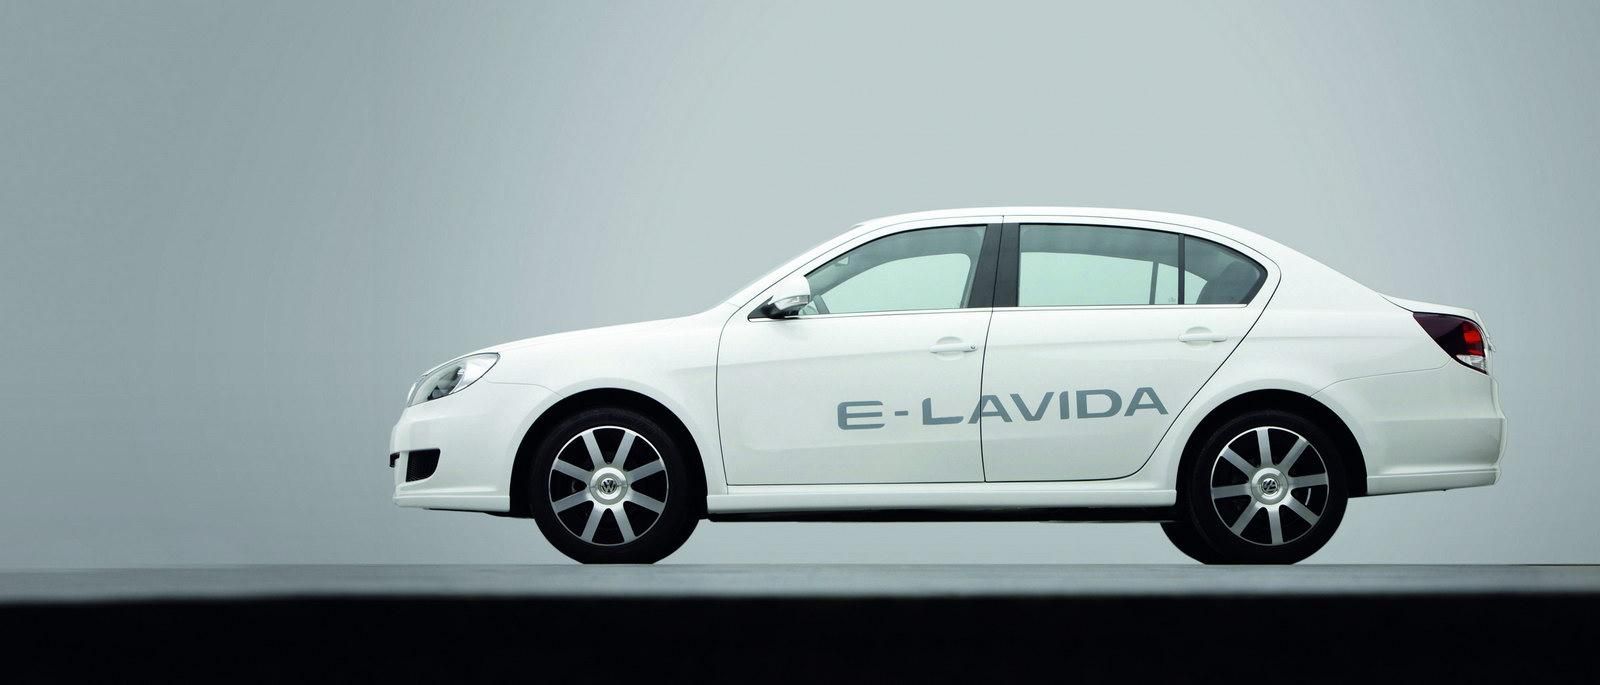 2010 Volkswagen E-Lavida